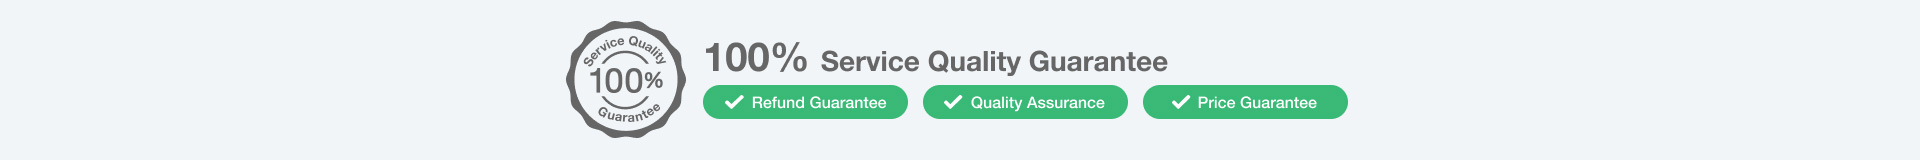 100% Service Quality Guarantee